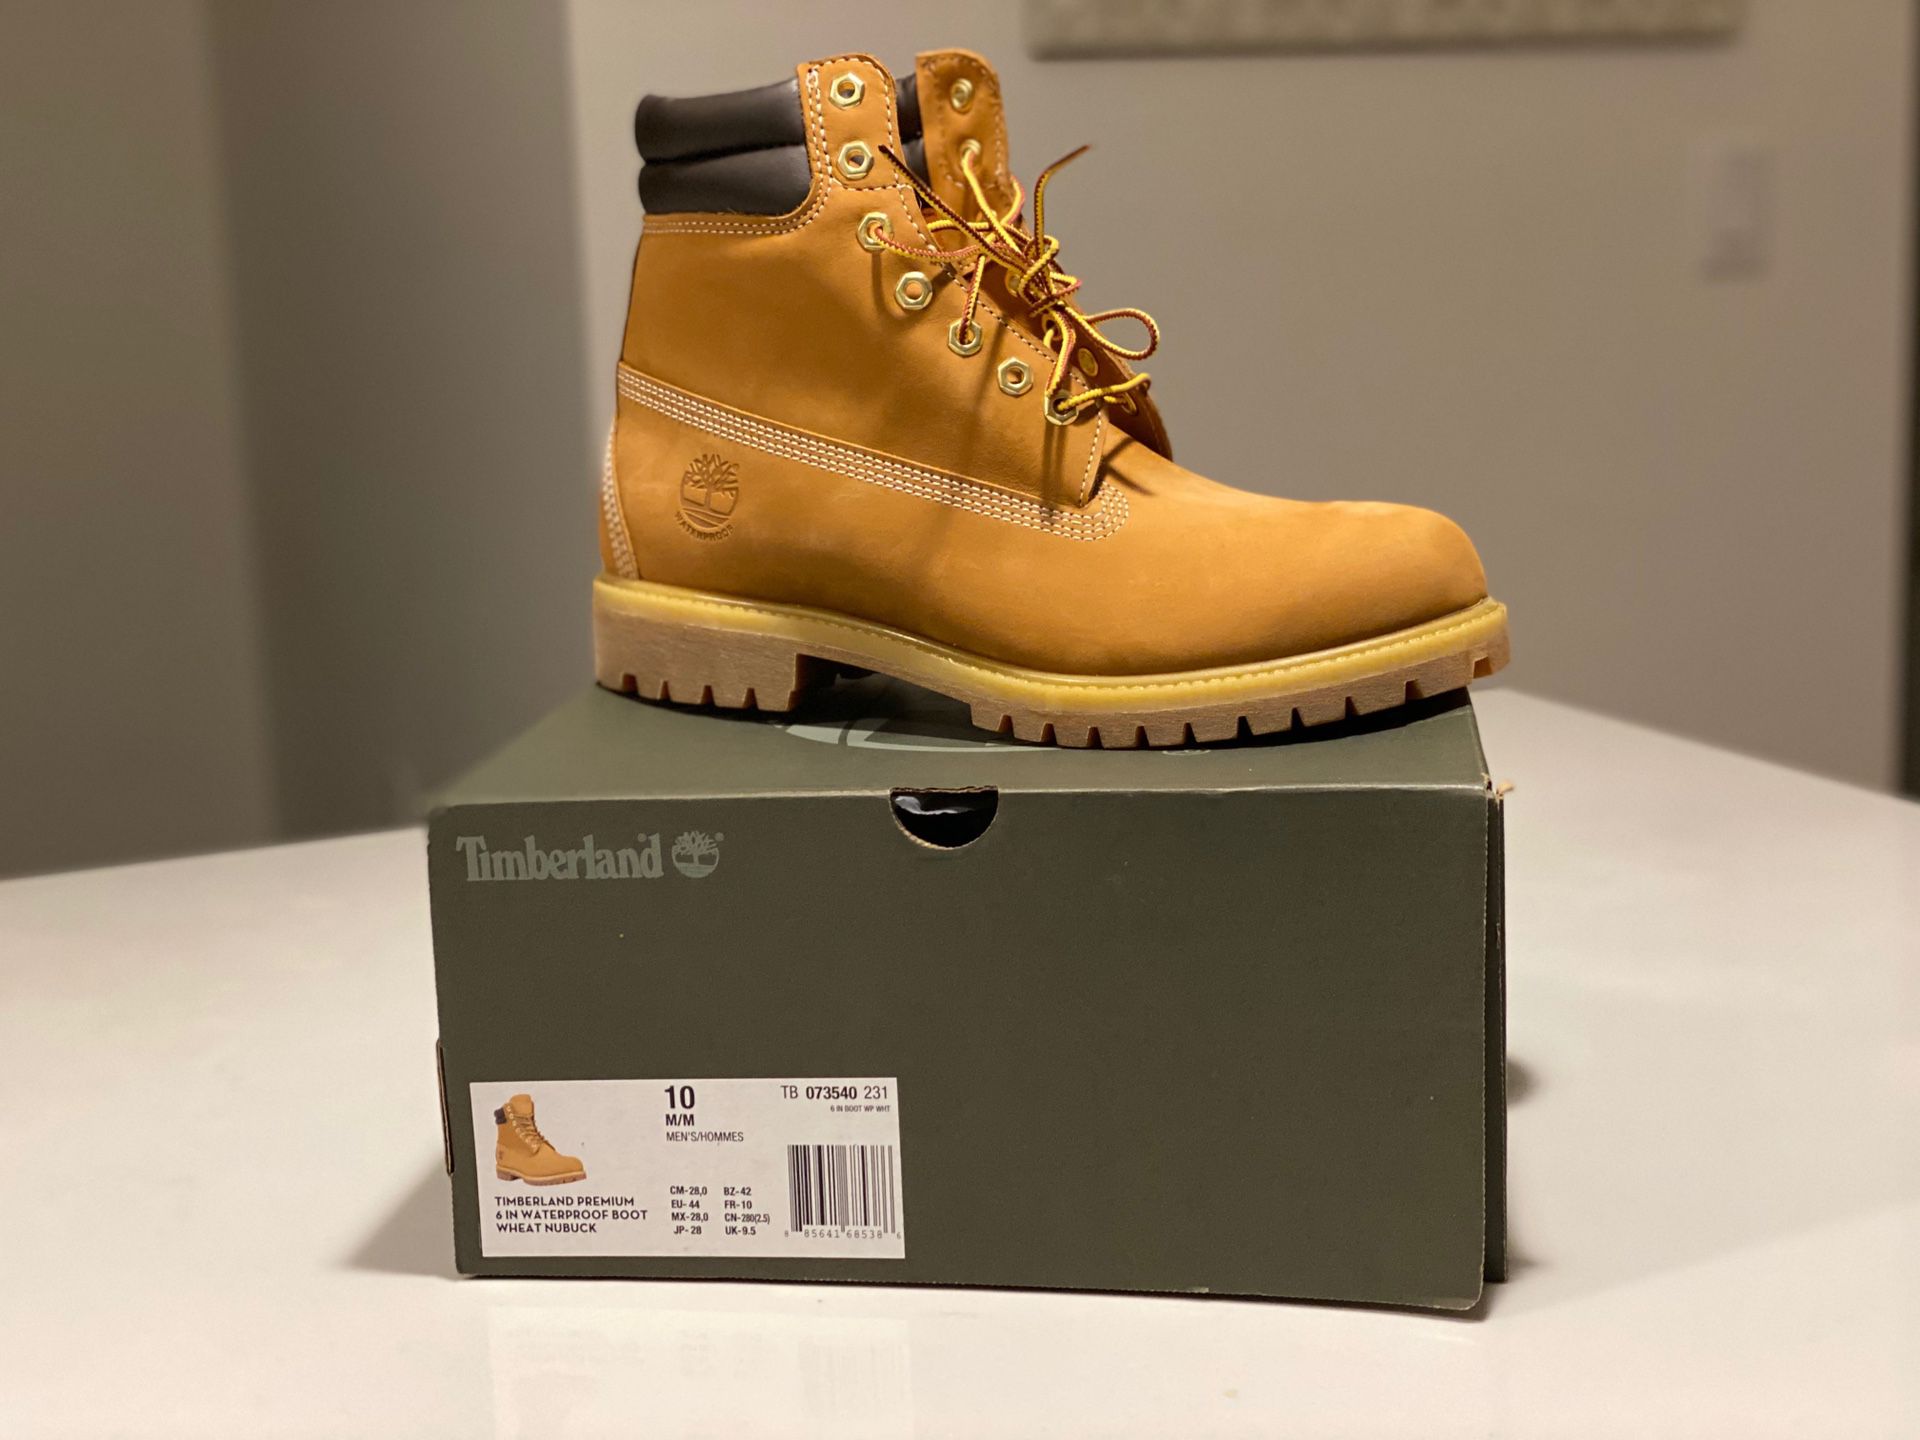 Timberland Men’s 6-inch Premium Waterproof Boots (Size 10)